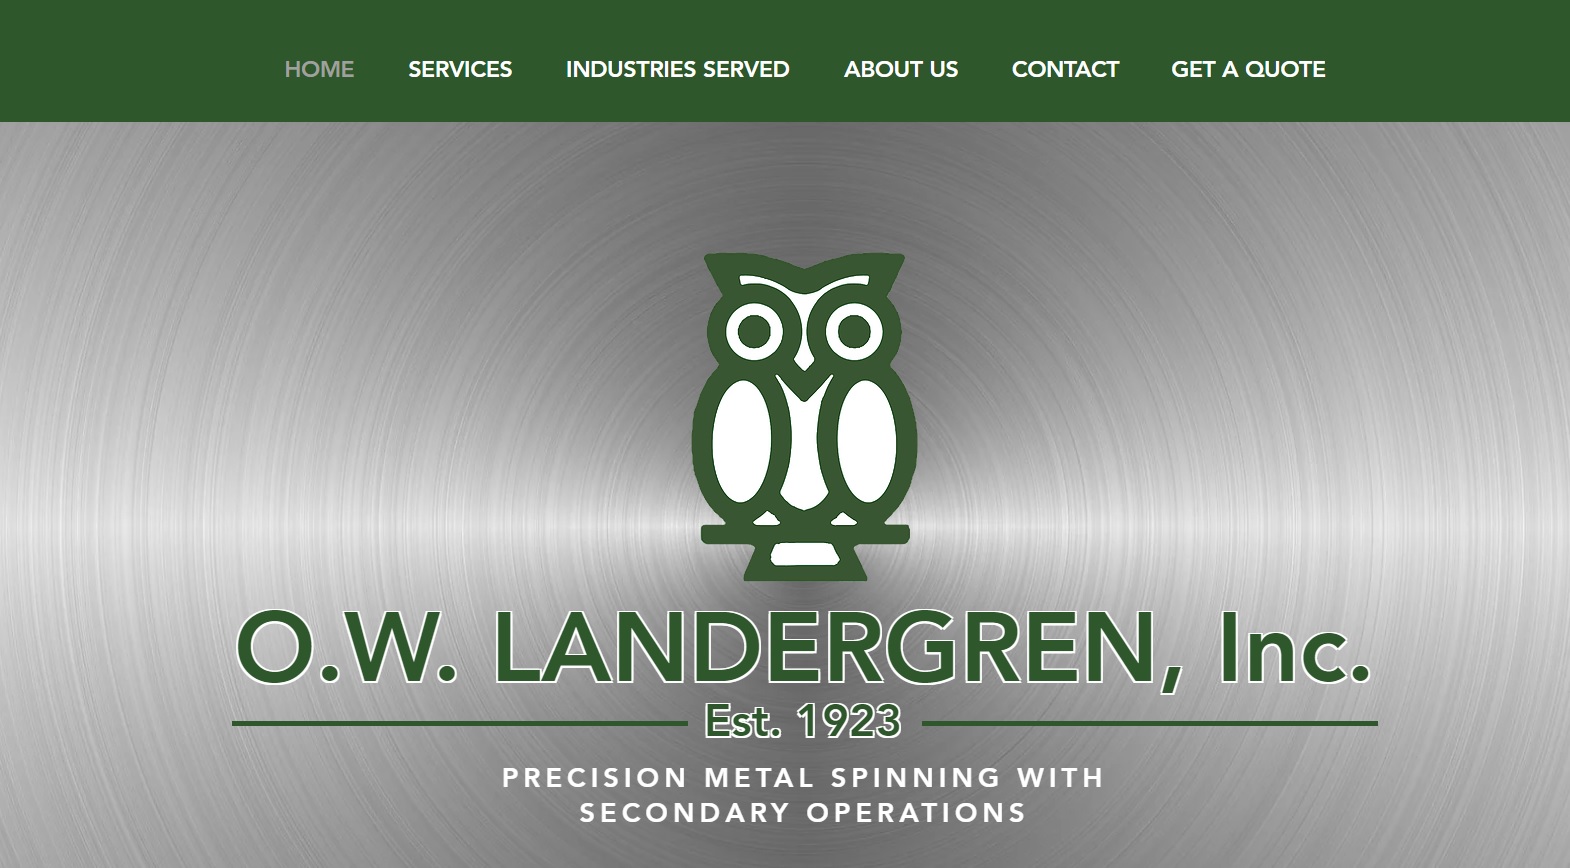 O.W. Landergren, Inc.